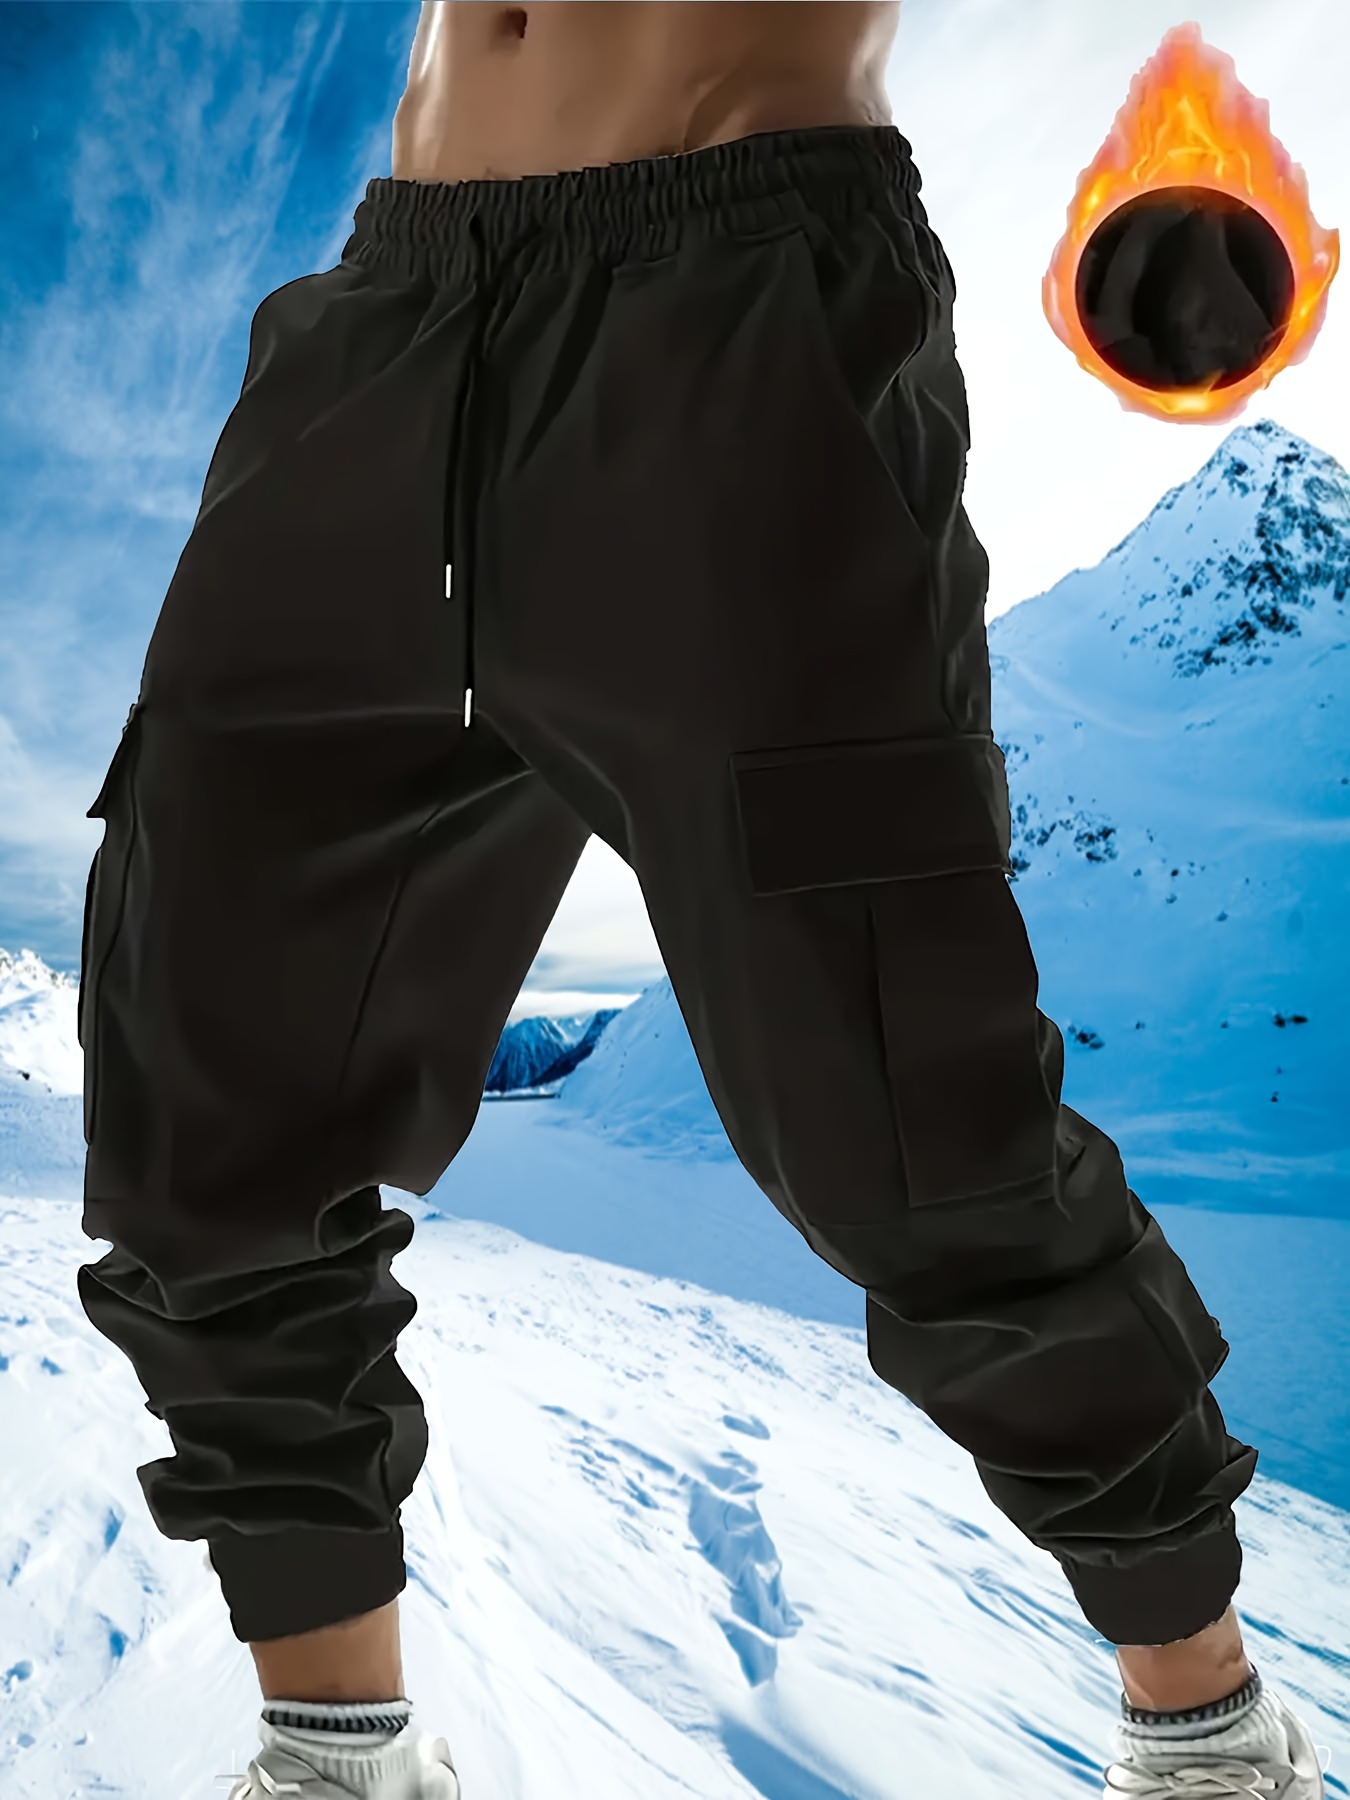 Pantalones de Nieve - Billabong Chile